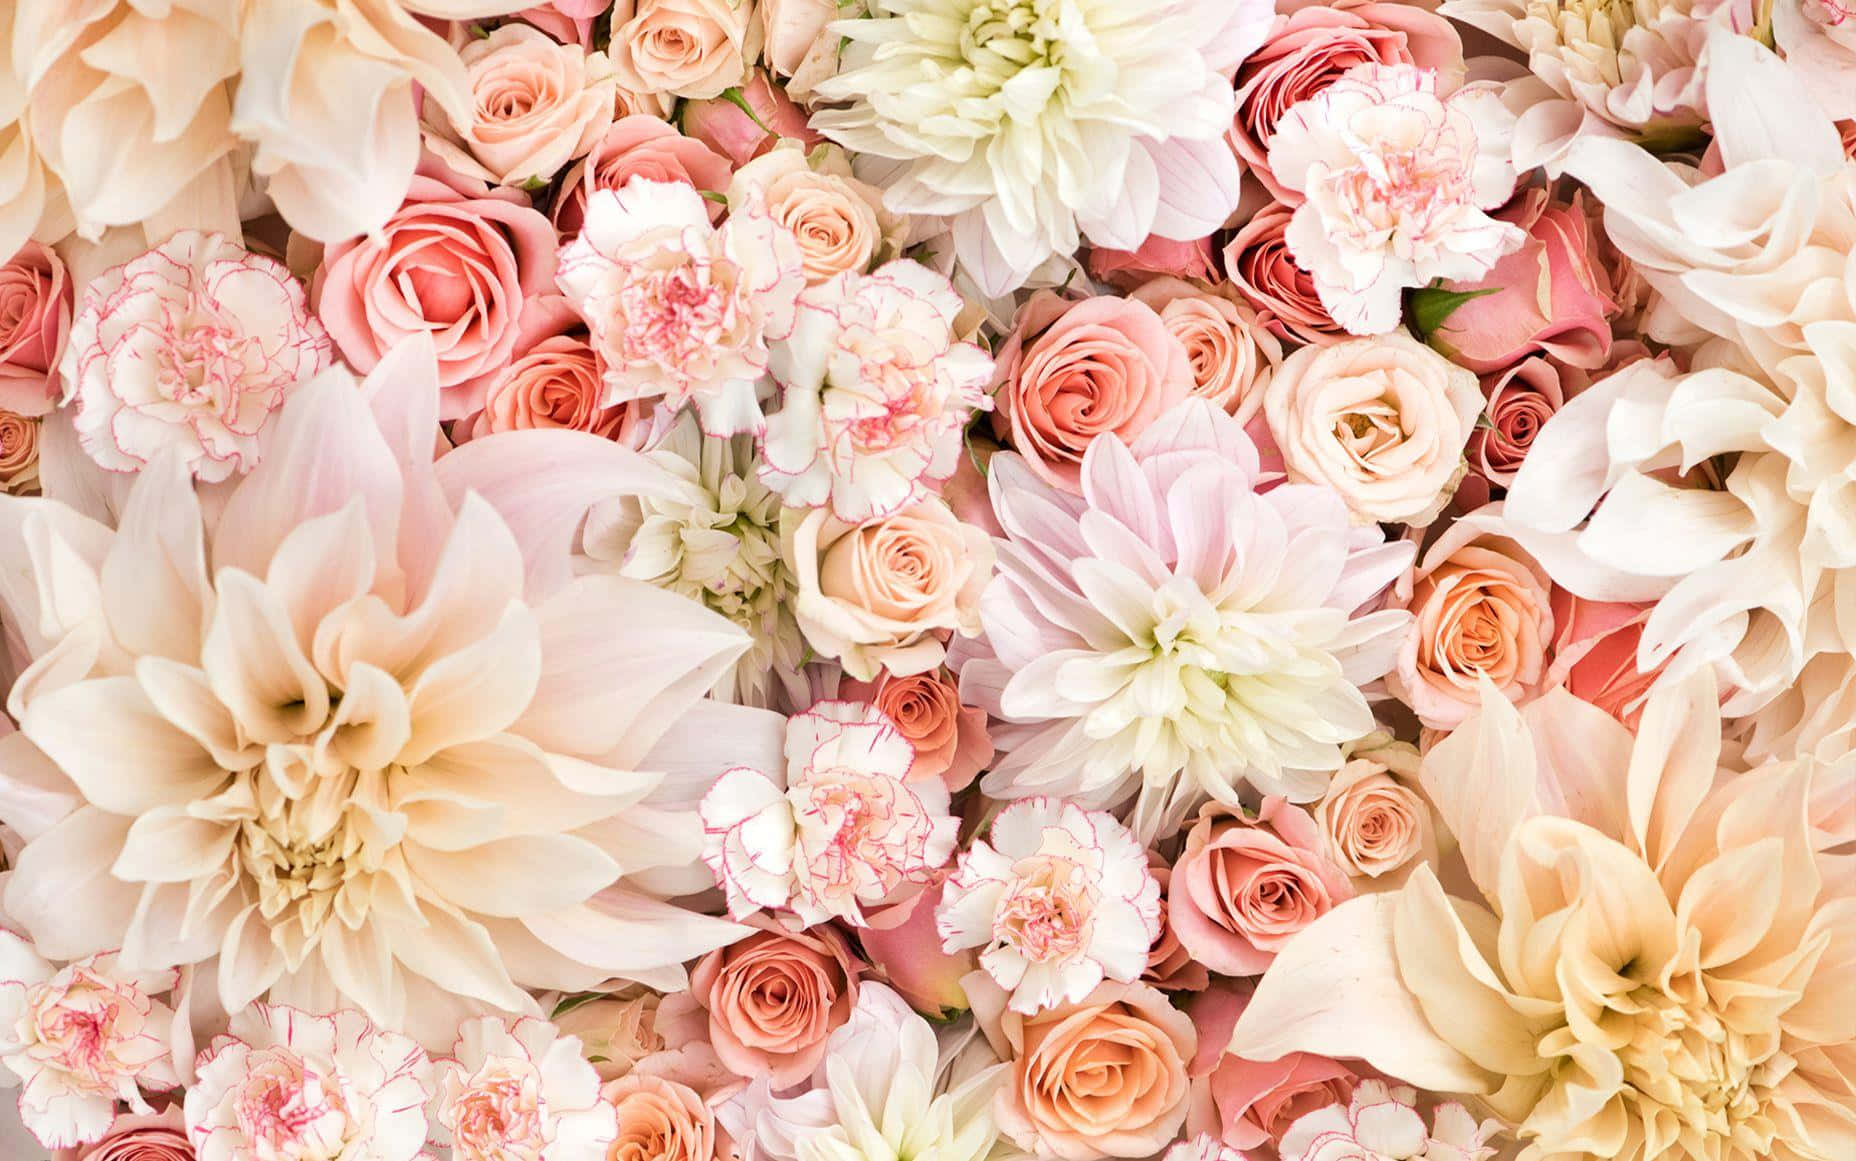 Pastel Floral Array.jpg Wallpaper